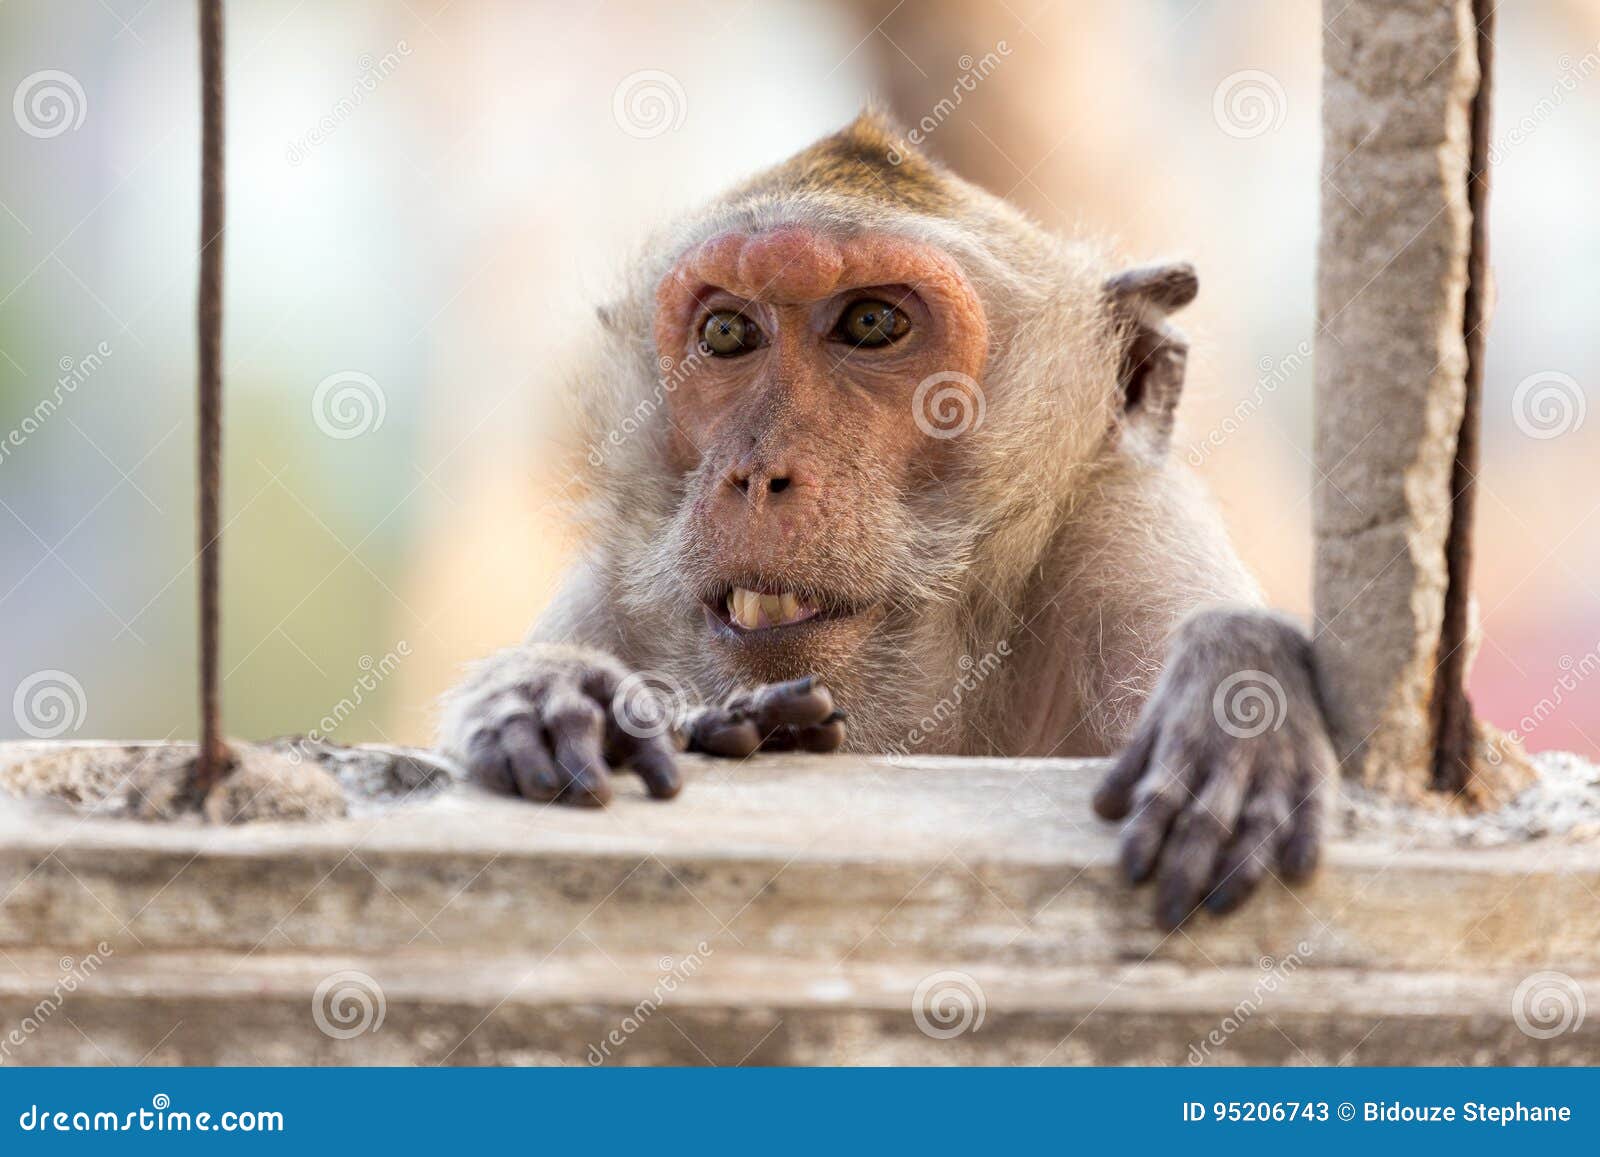 nasty macaque showing teeth